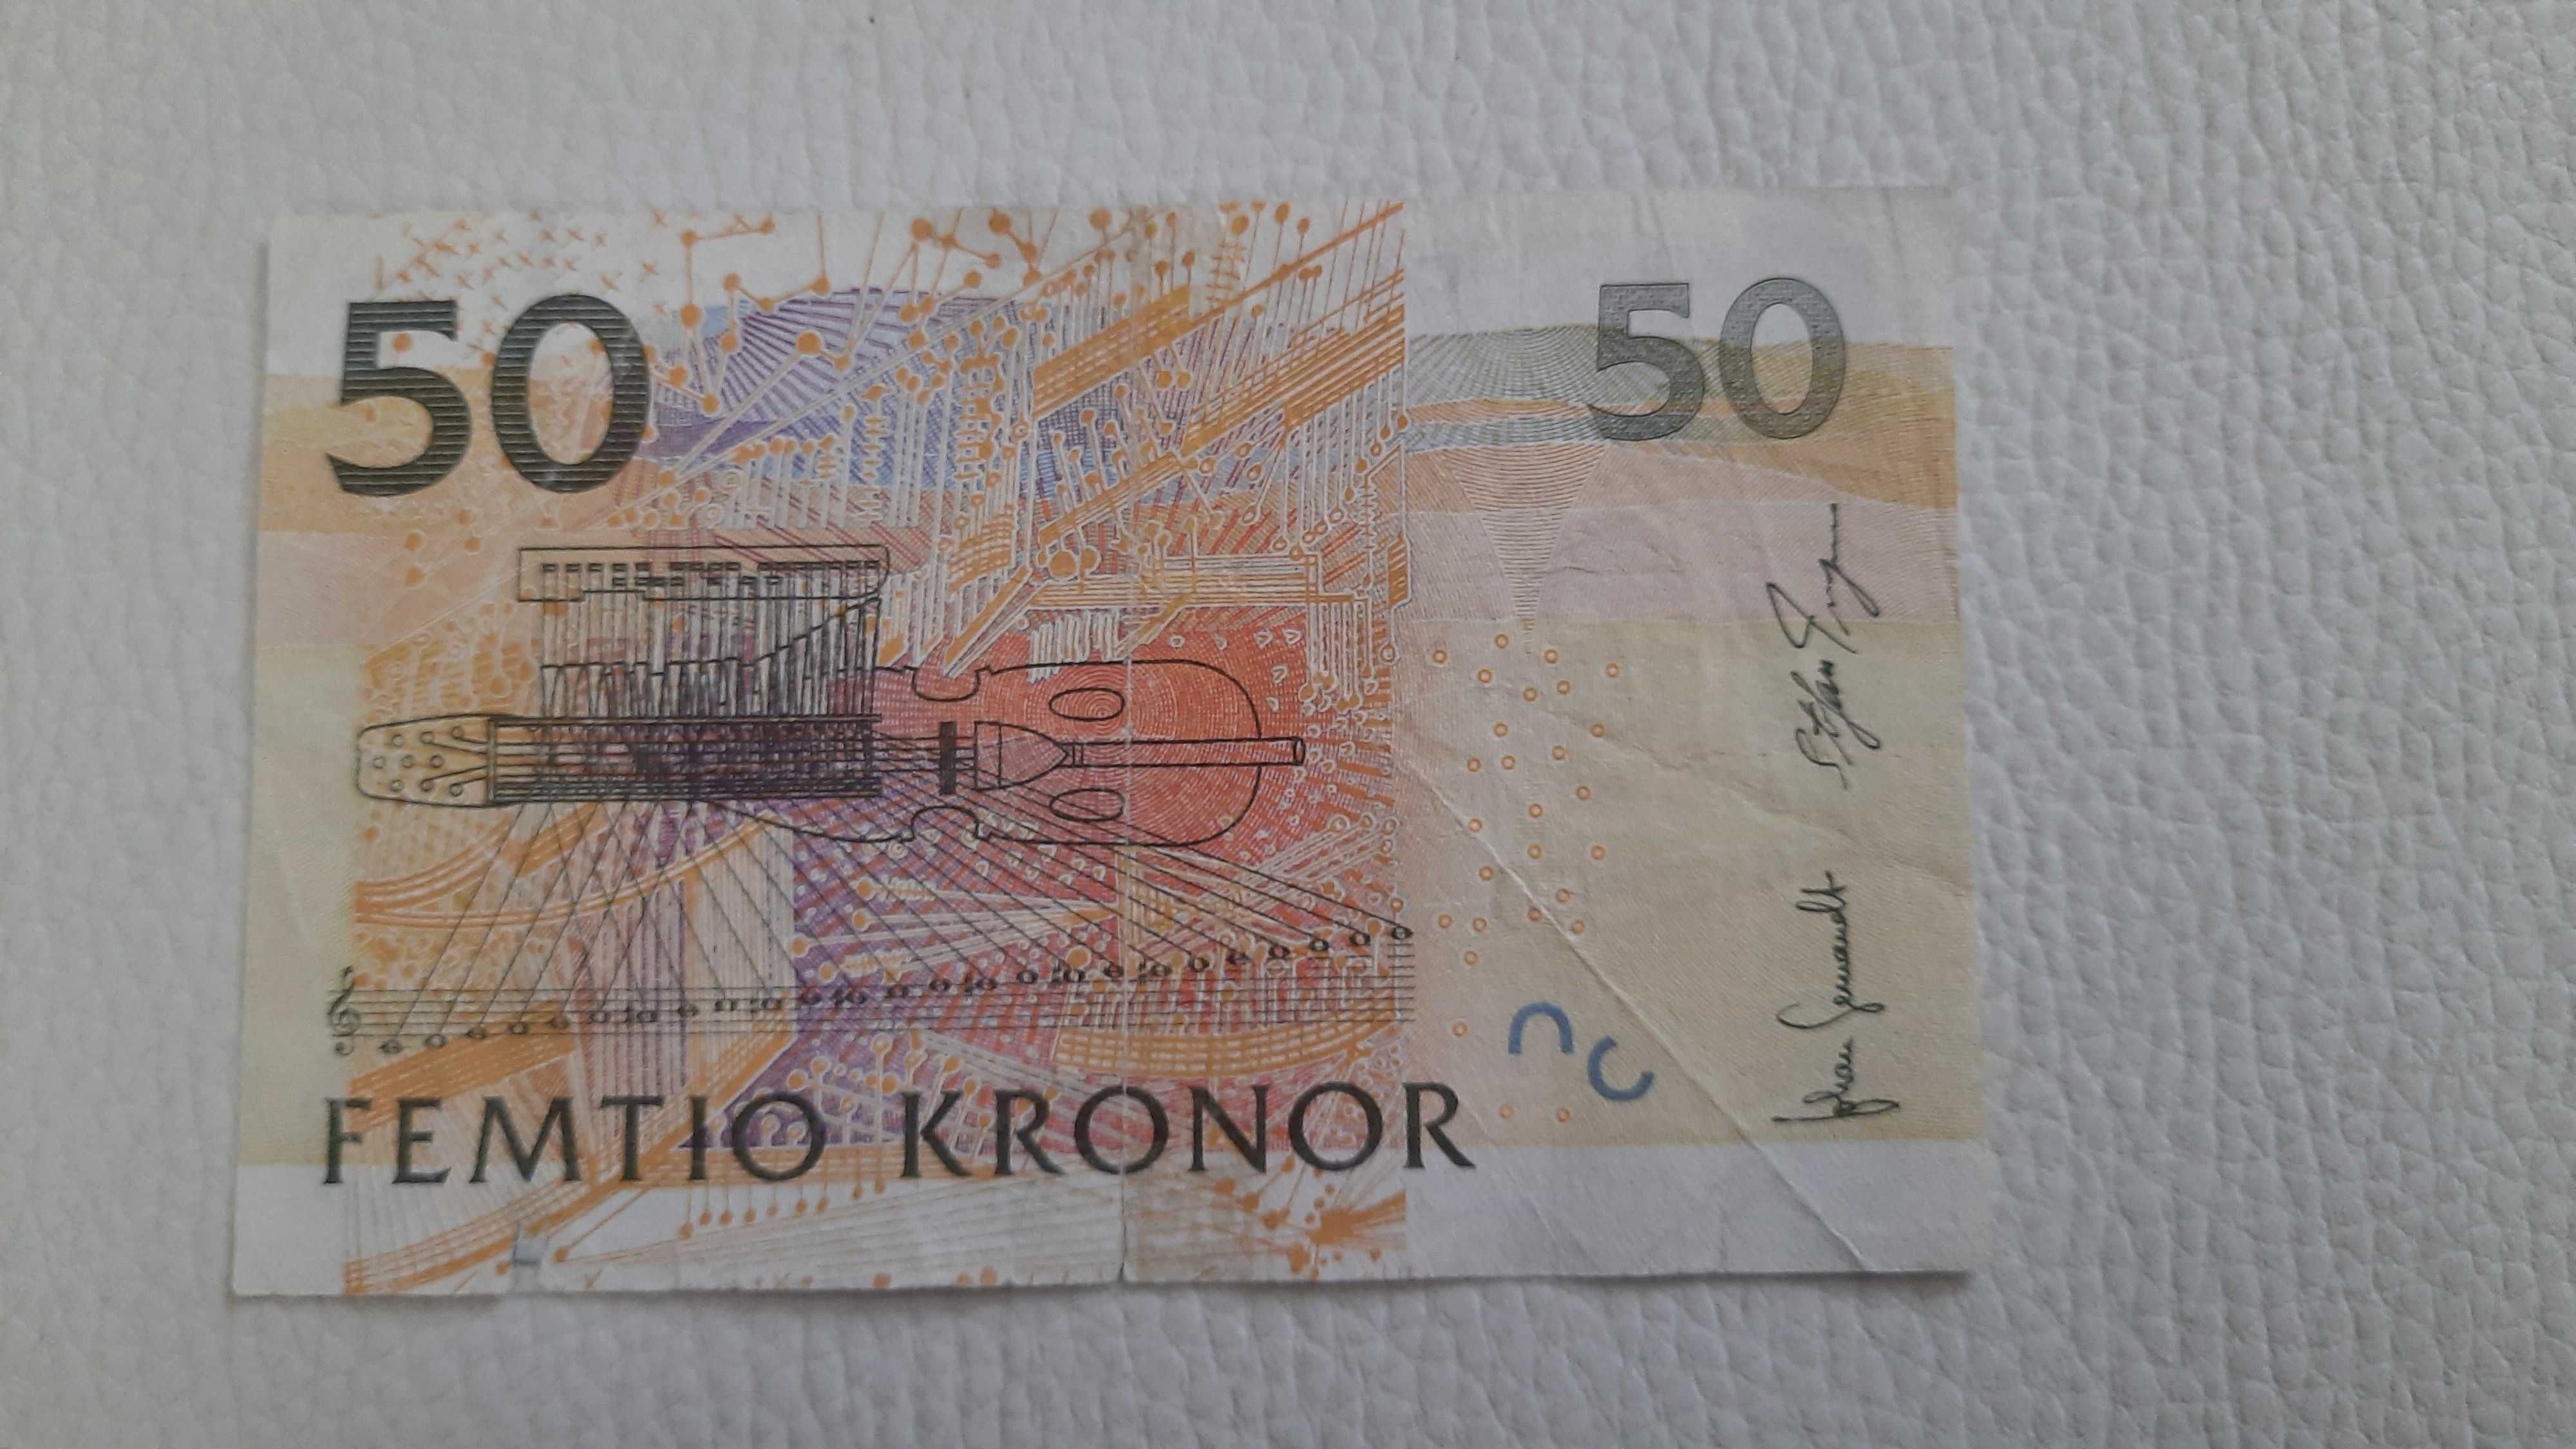 Banknot 50 SEK szwedzka korona 2003 rok